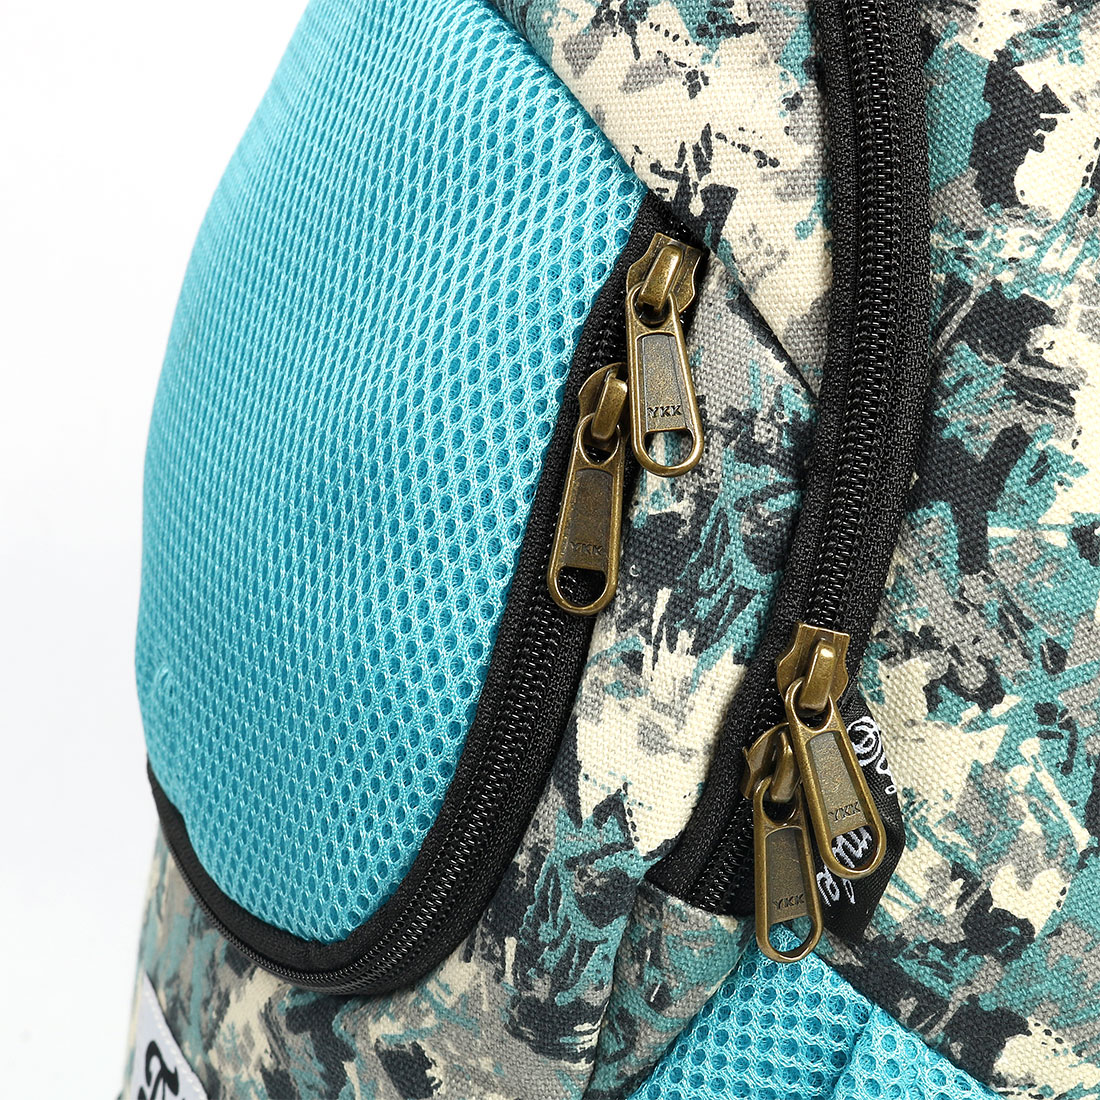 Unique Bargains Mesh and Canvas Dog Backpack, Light Blue - image 5 of 7